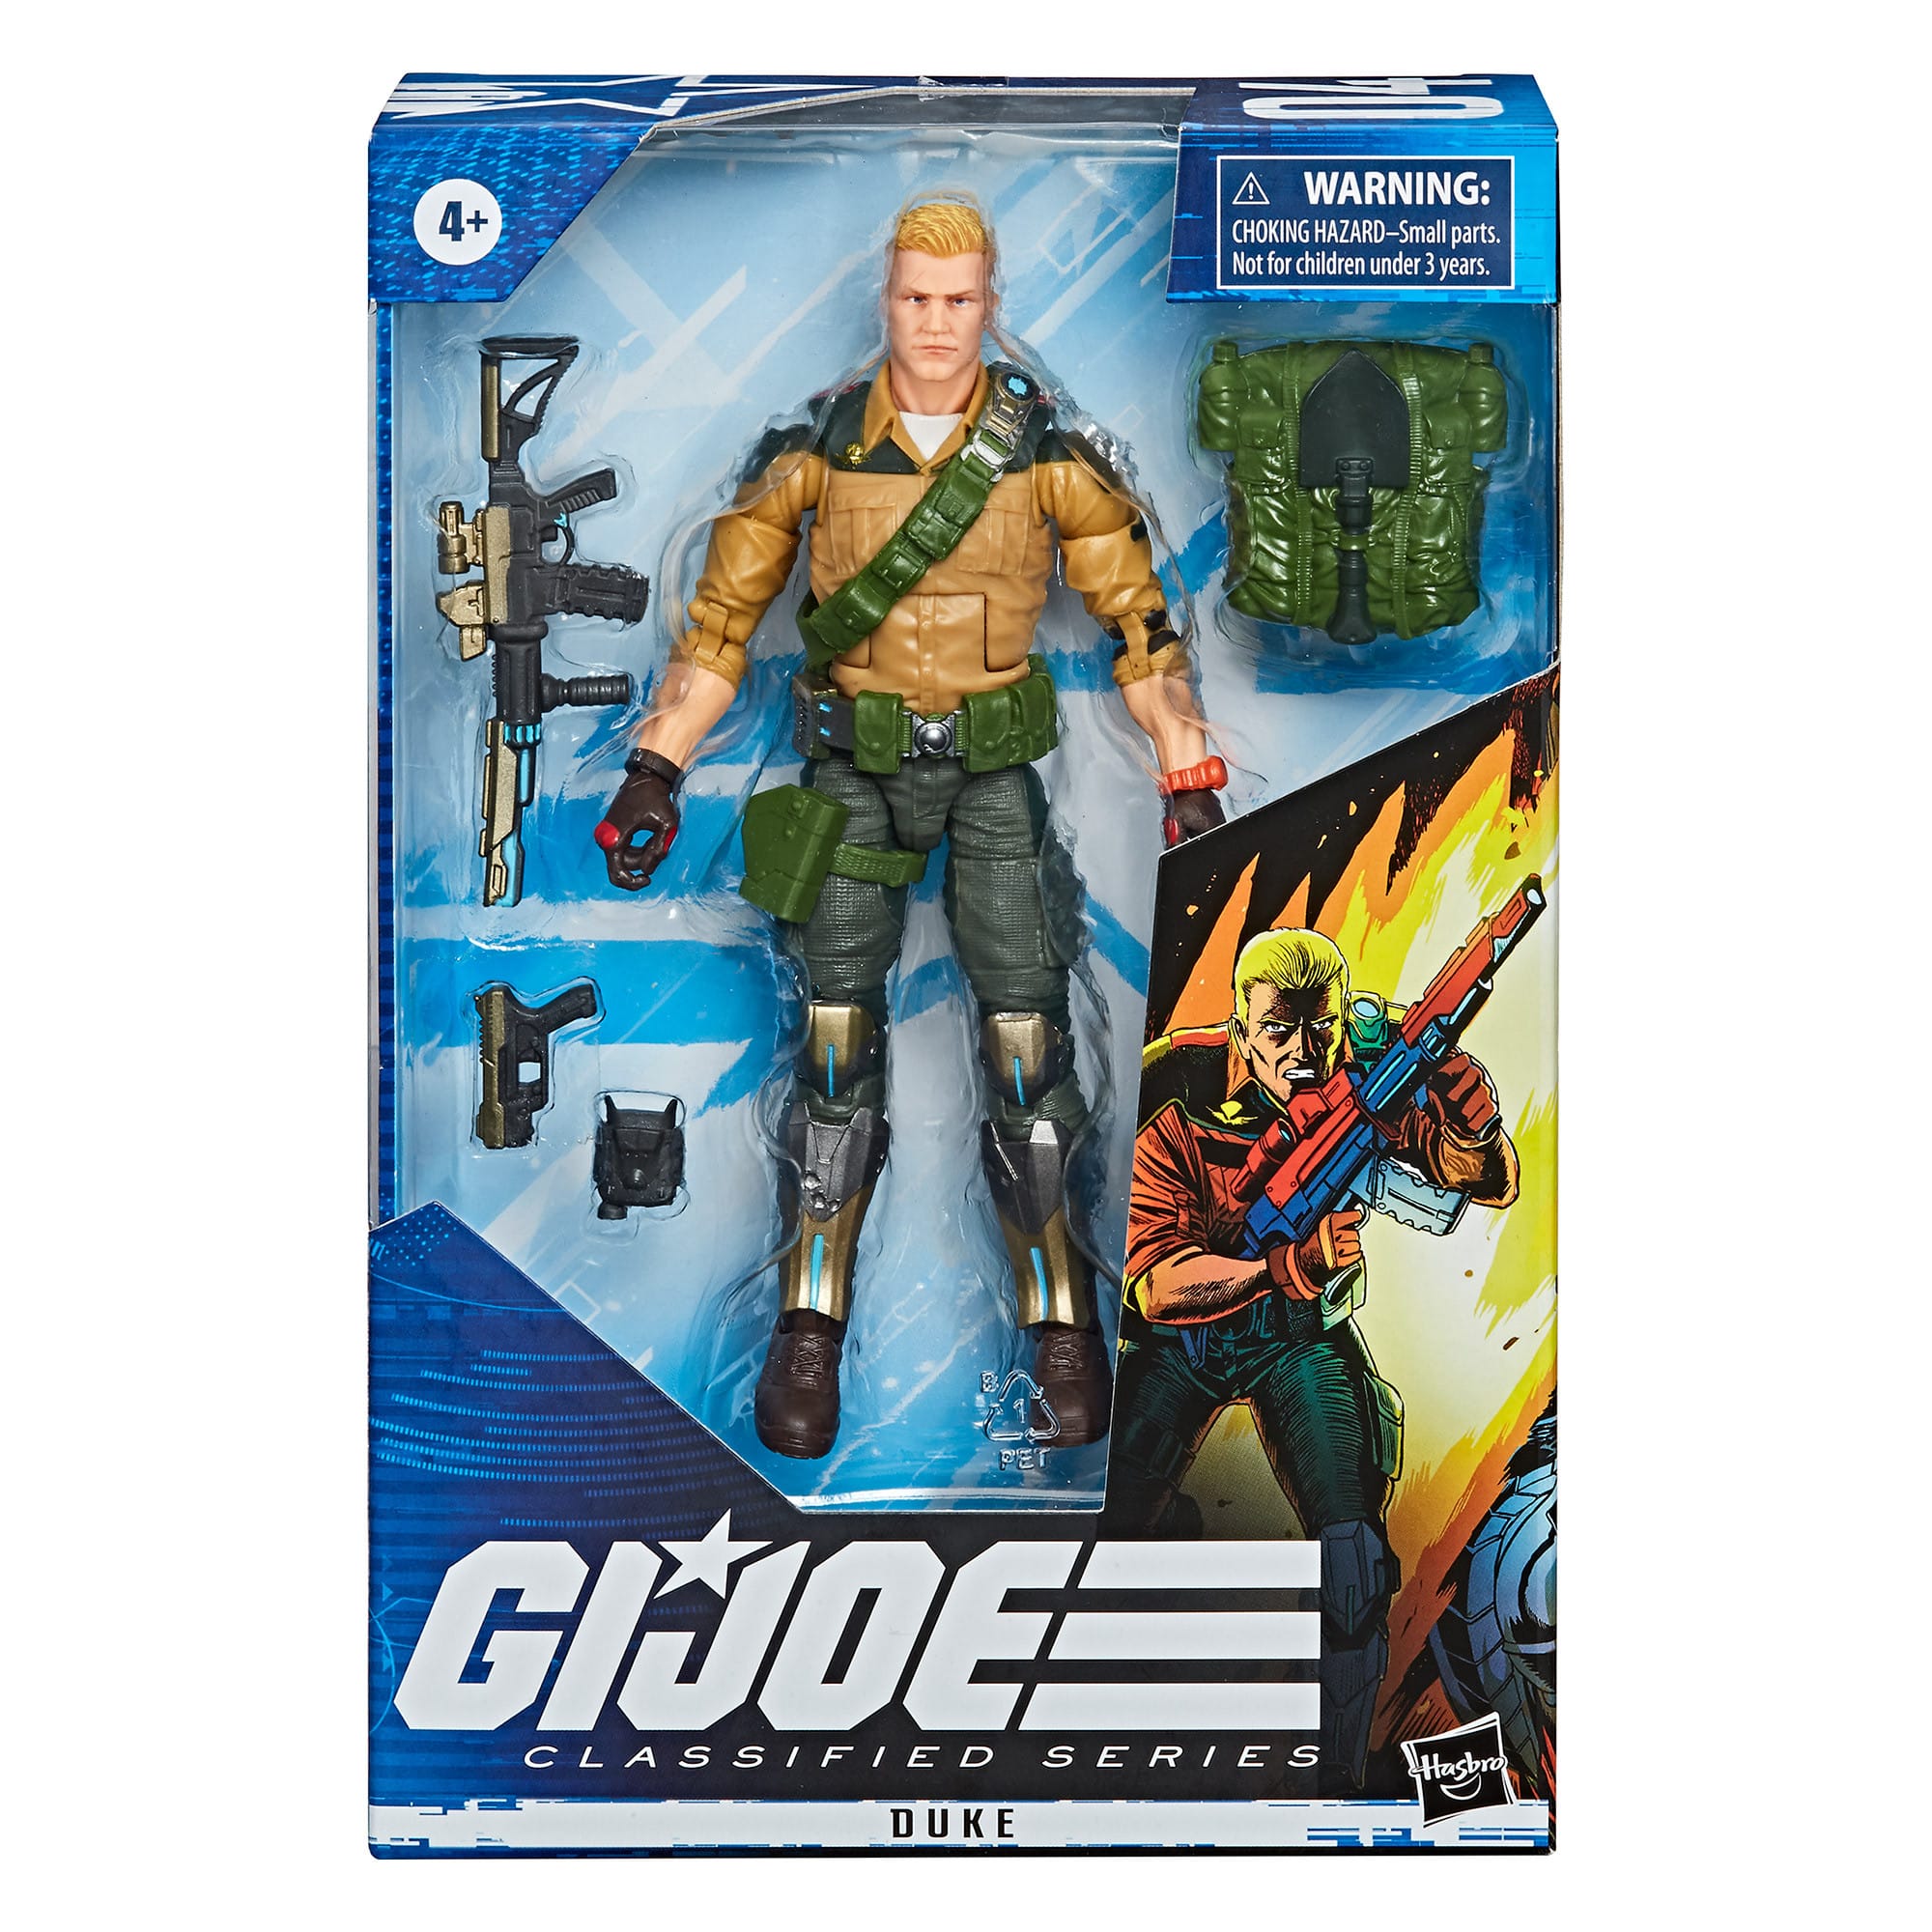 GI Joe - Classified Series - Duke Action Figure